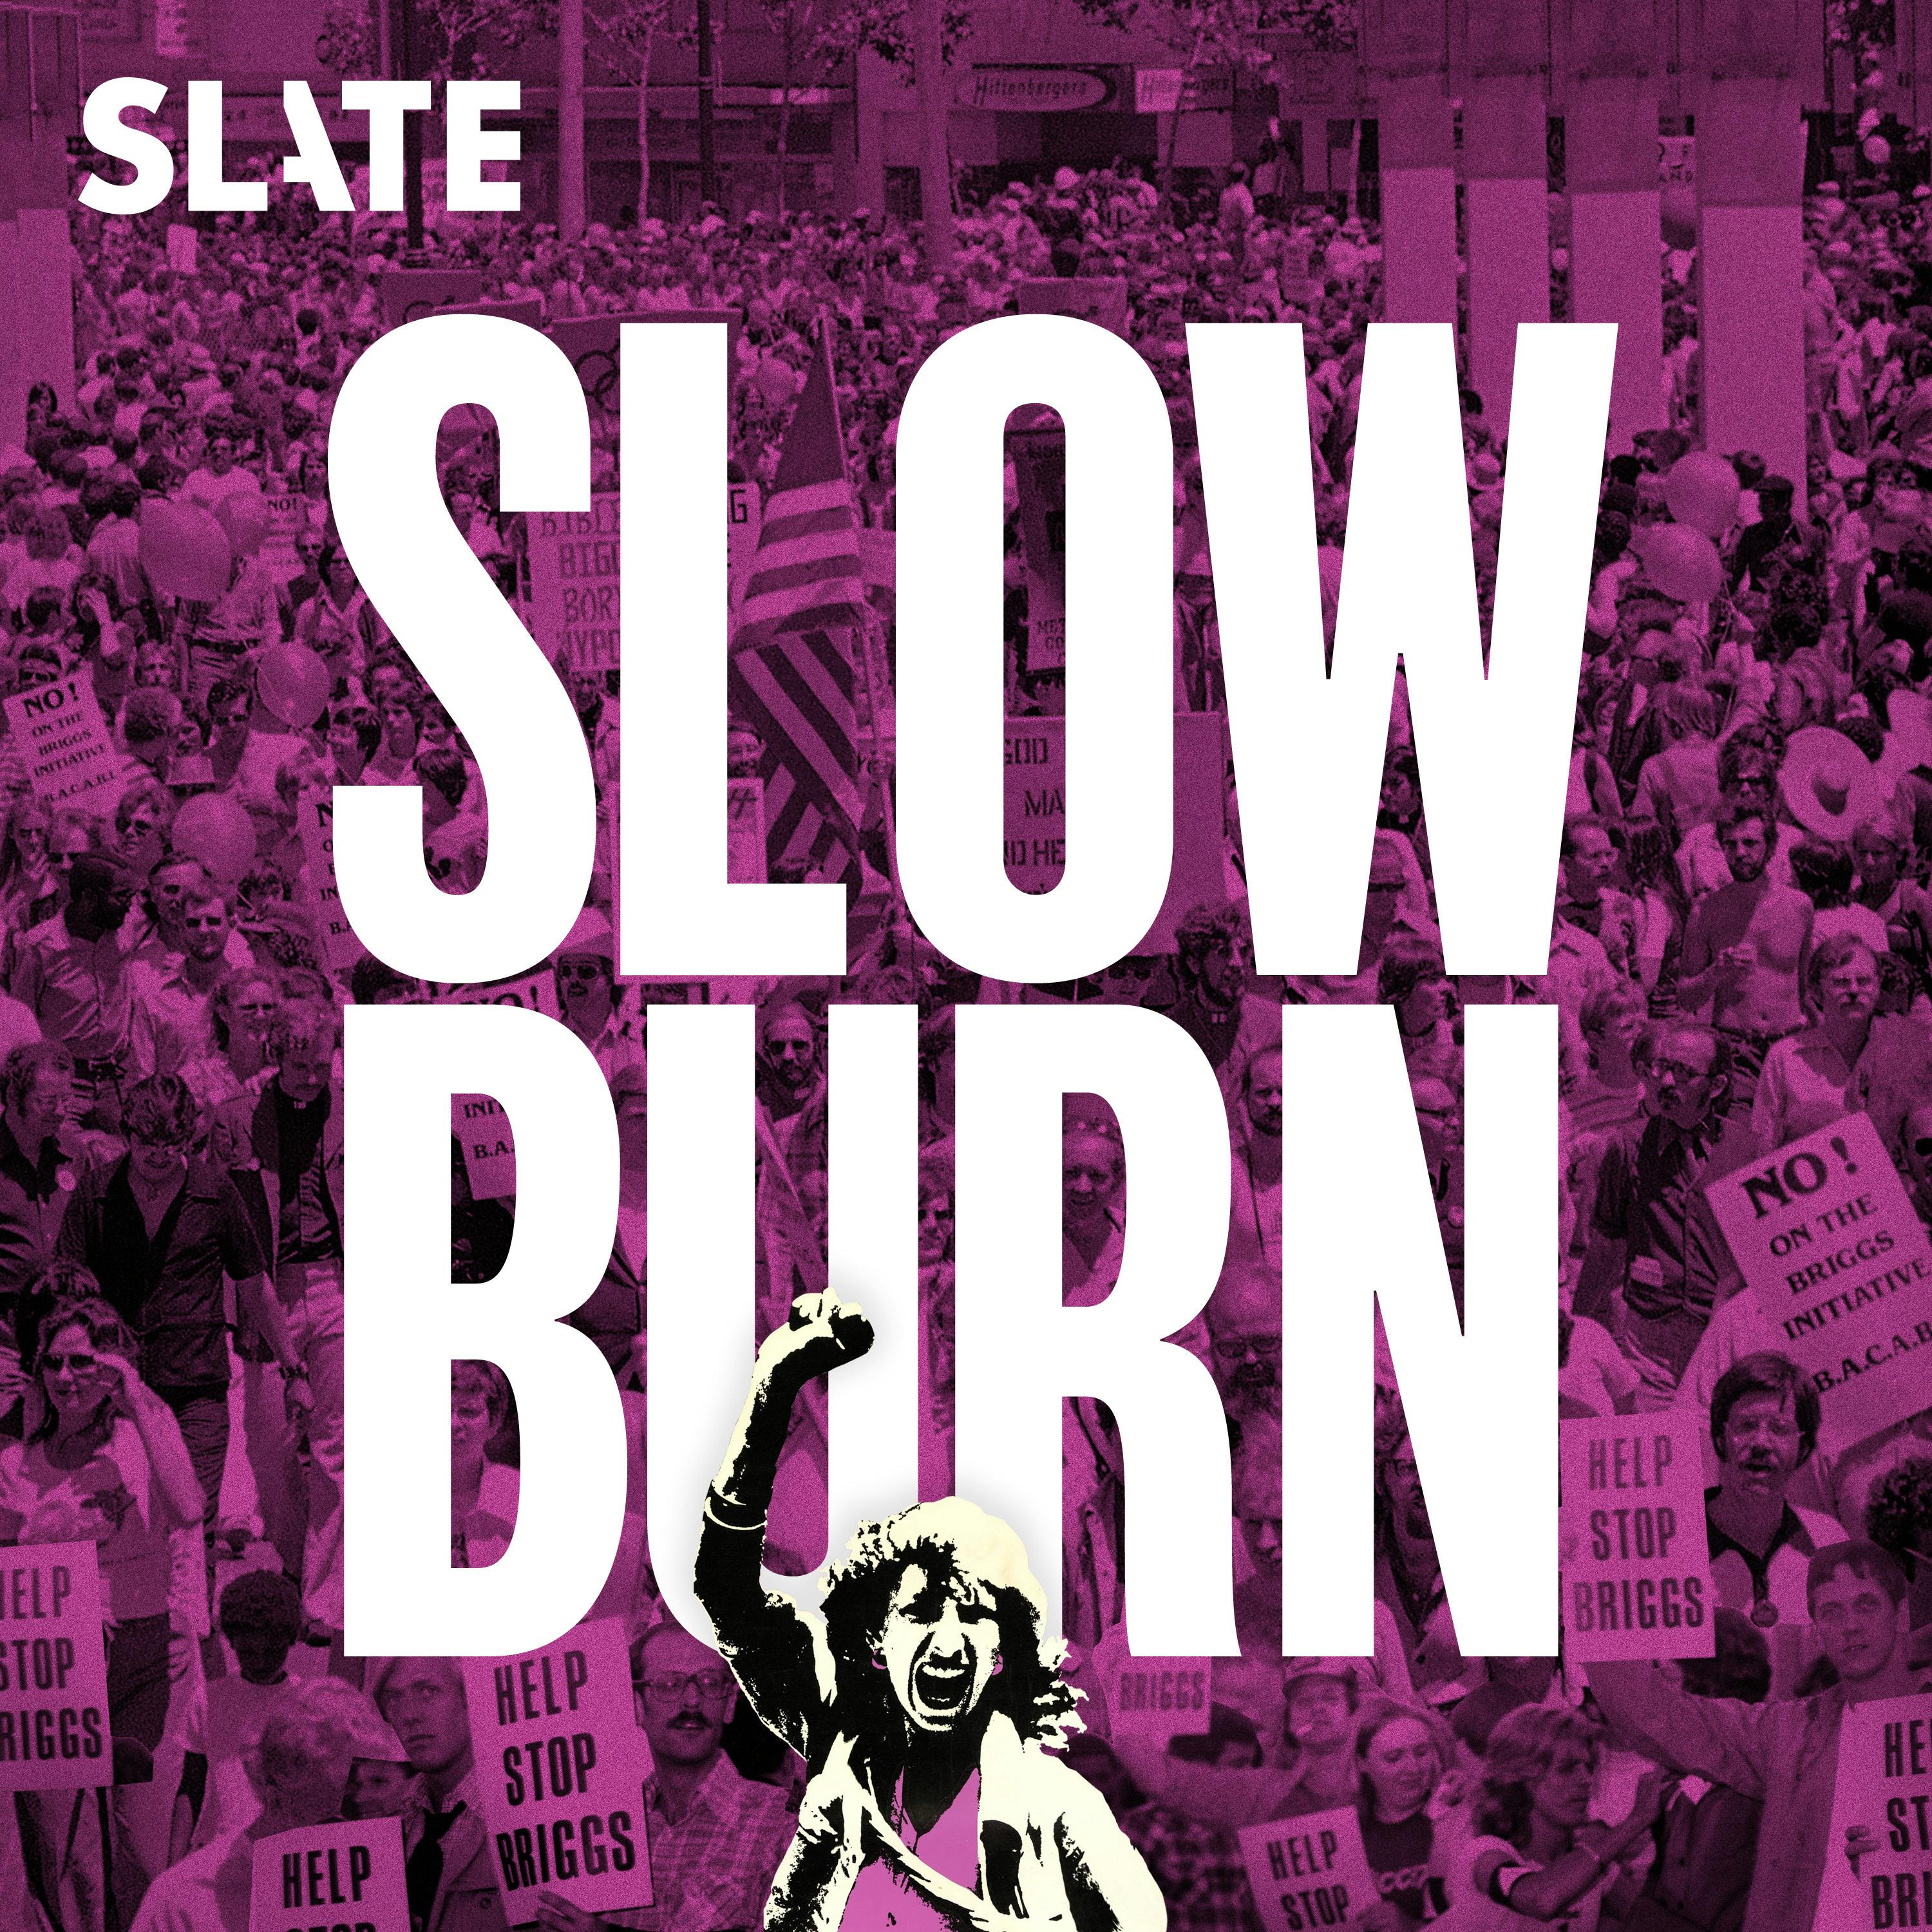 Slow Burn:Slate Podcasts